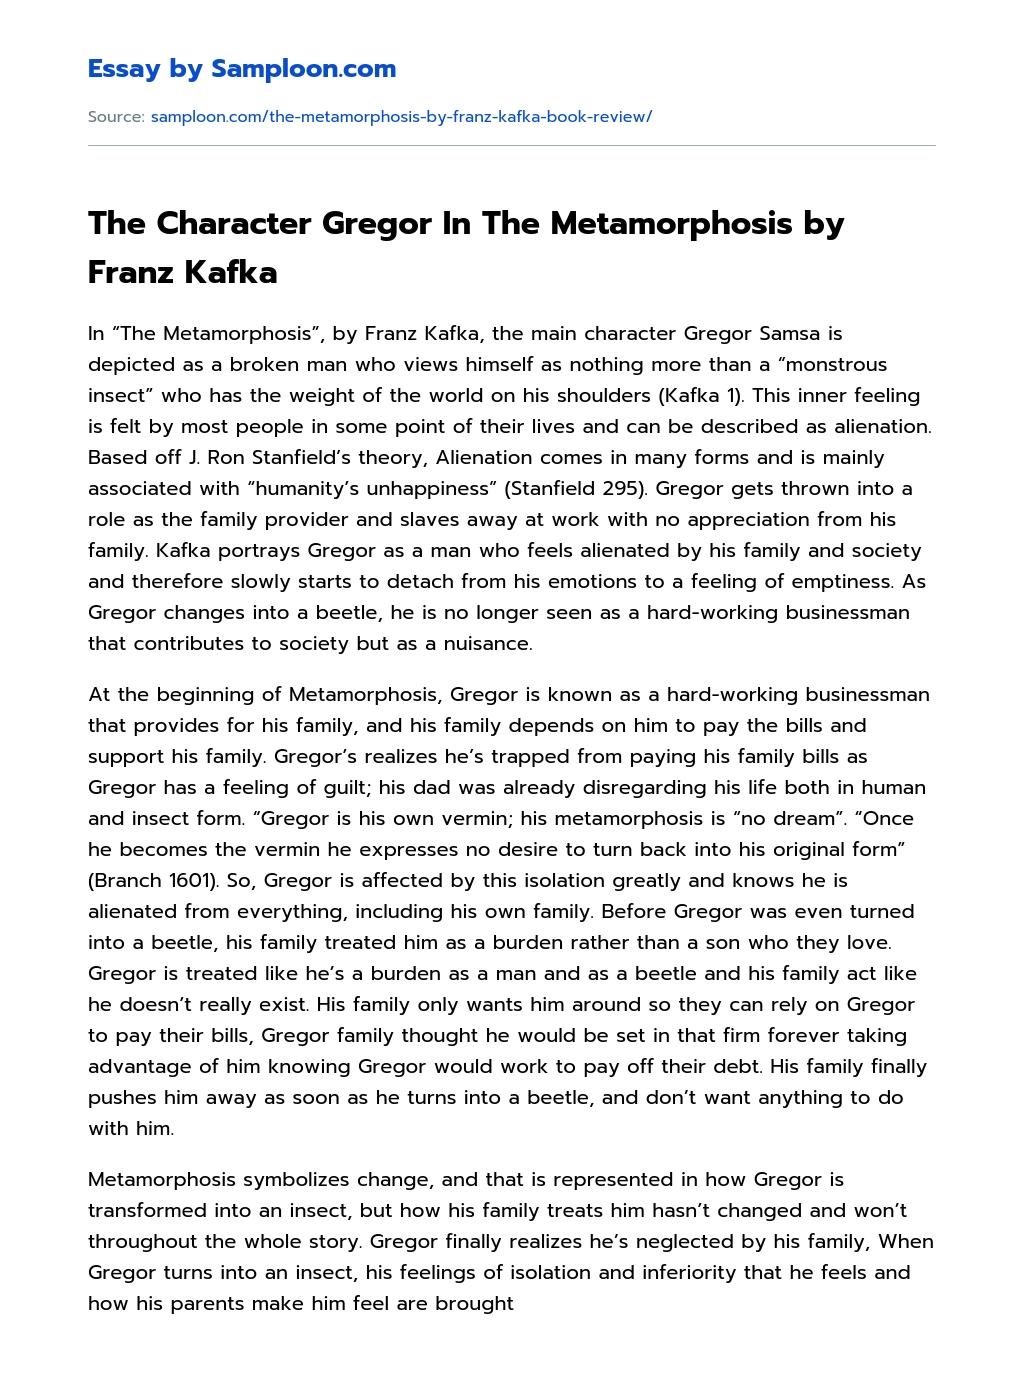 The Character Gregor In The Metamorphosis by Franz Kafka essay